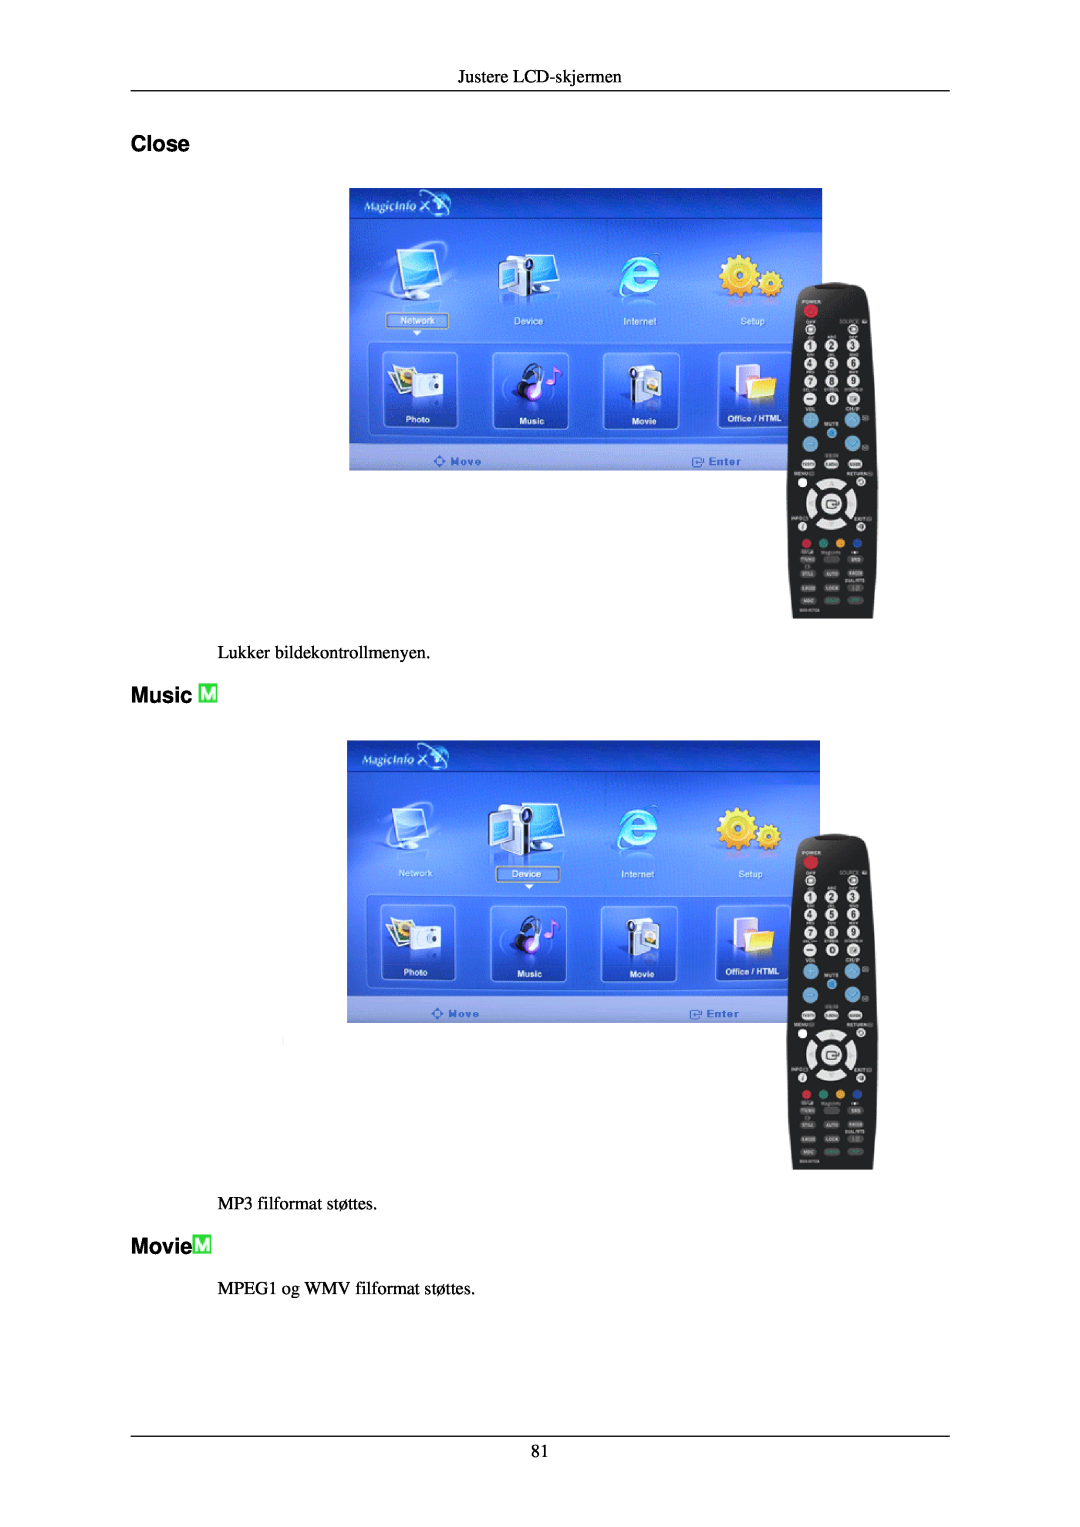 Samsung LH46TCUMBC/EN manual Close, Music, Movie, Justere LCD-skjermen, Lukker bildekontrollmenyen, MP3 filformat støttes 